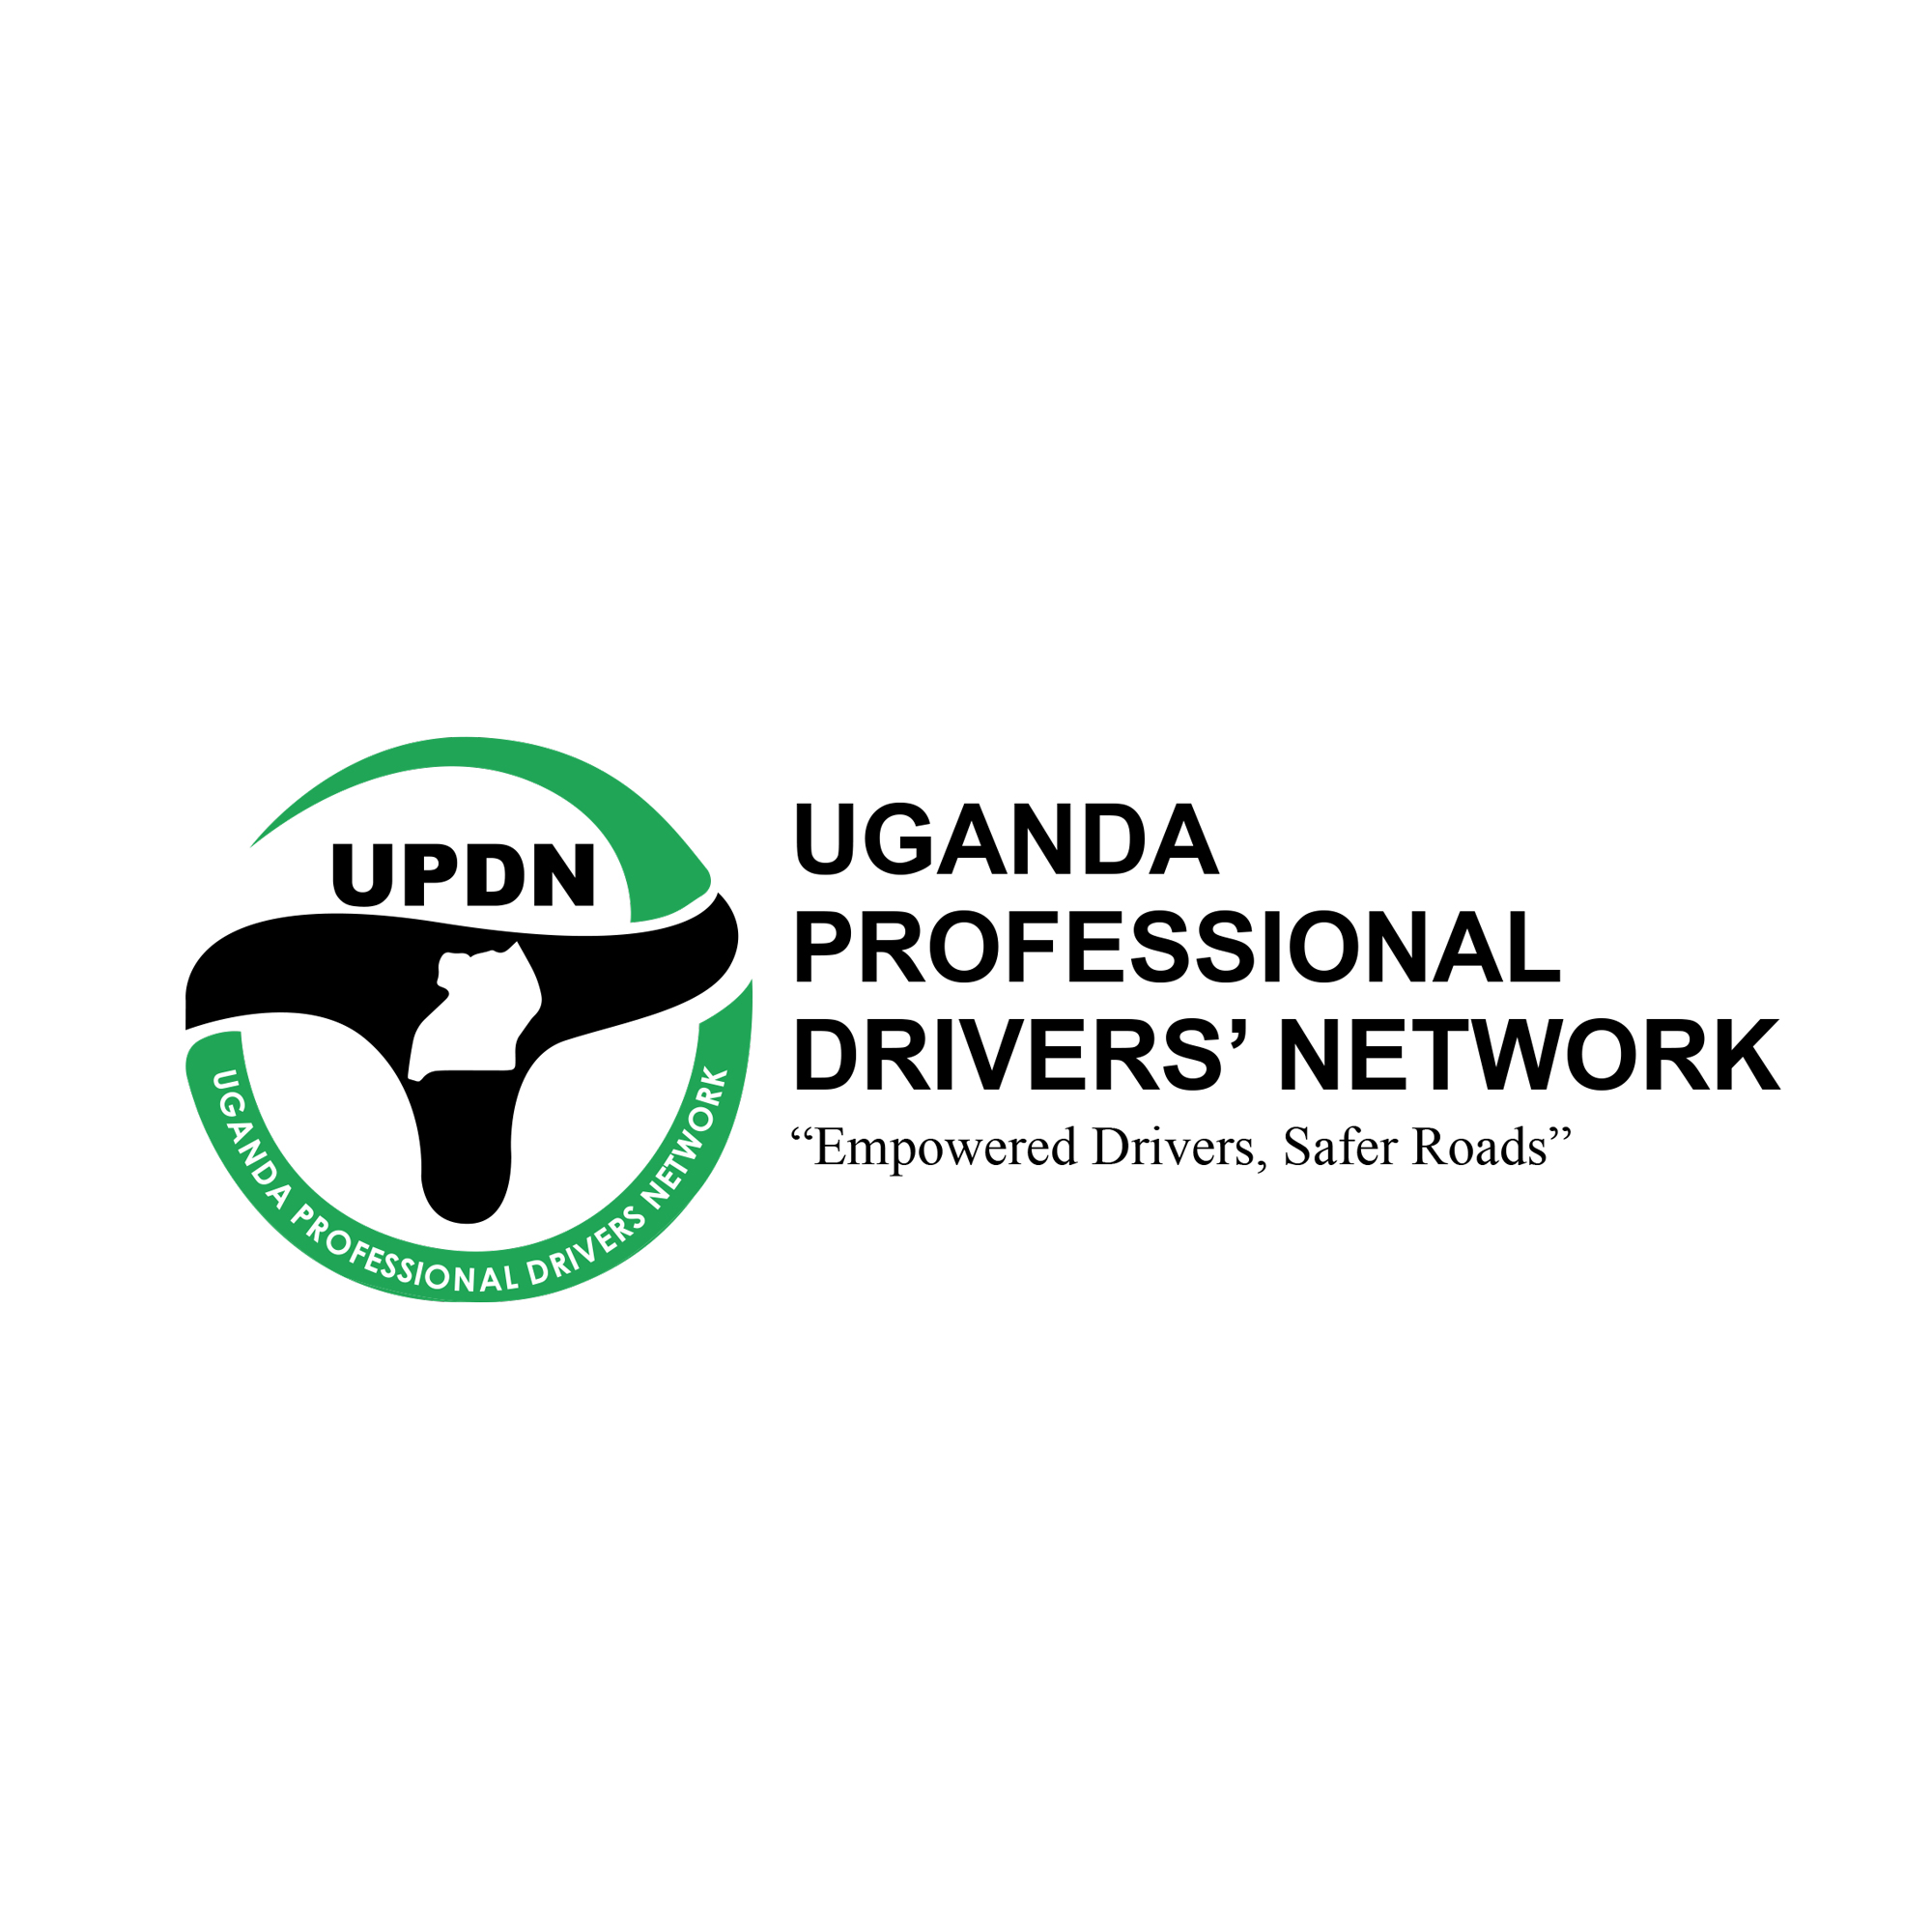 Uganda Professional Drivers' Network